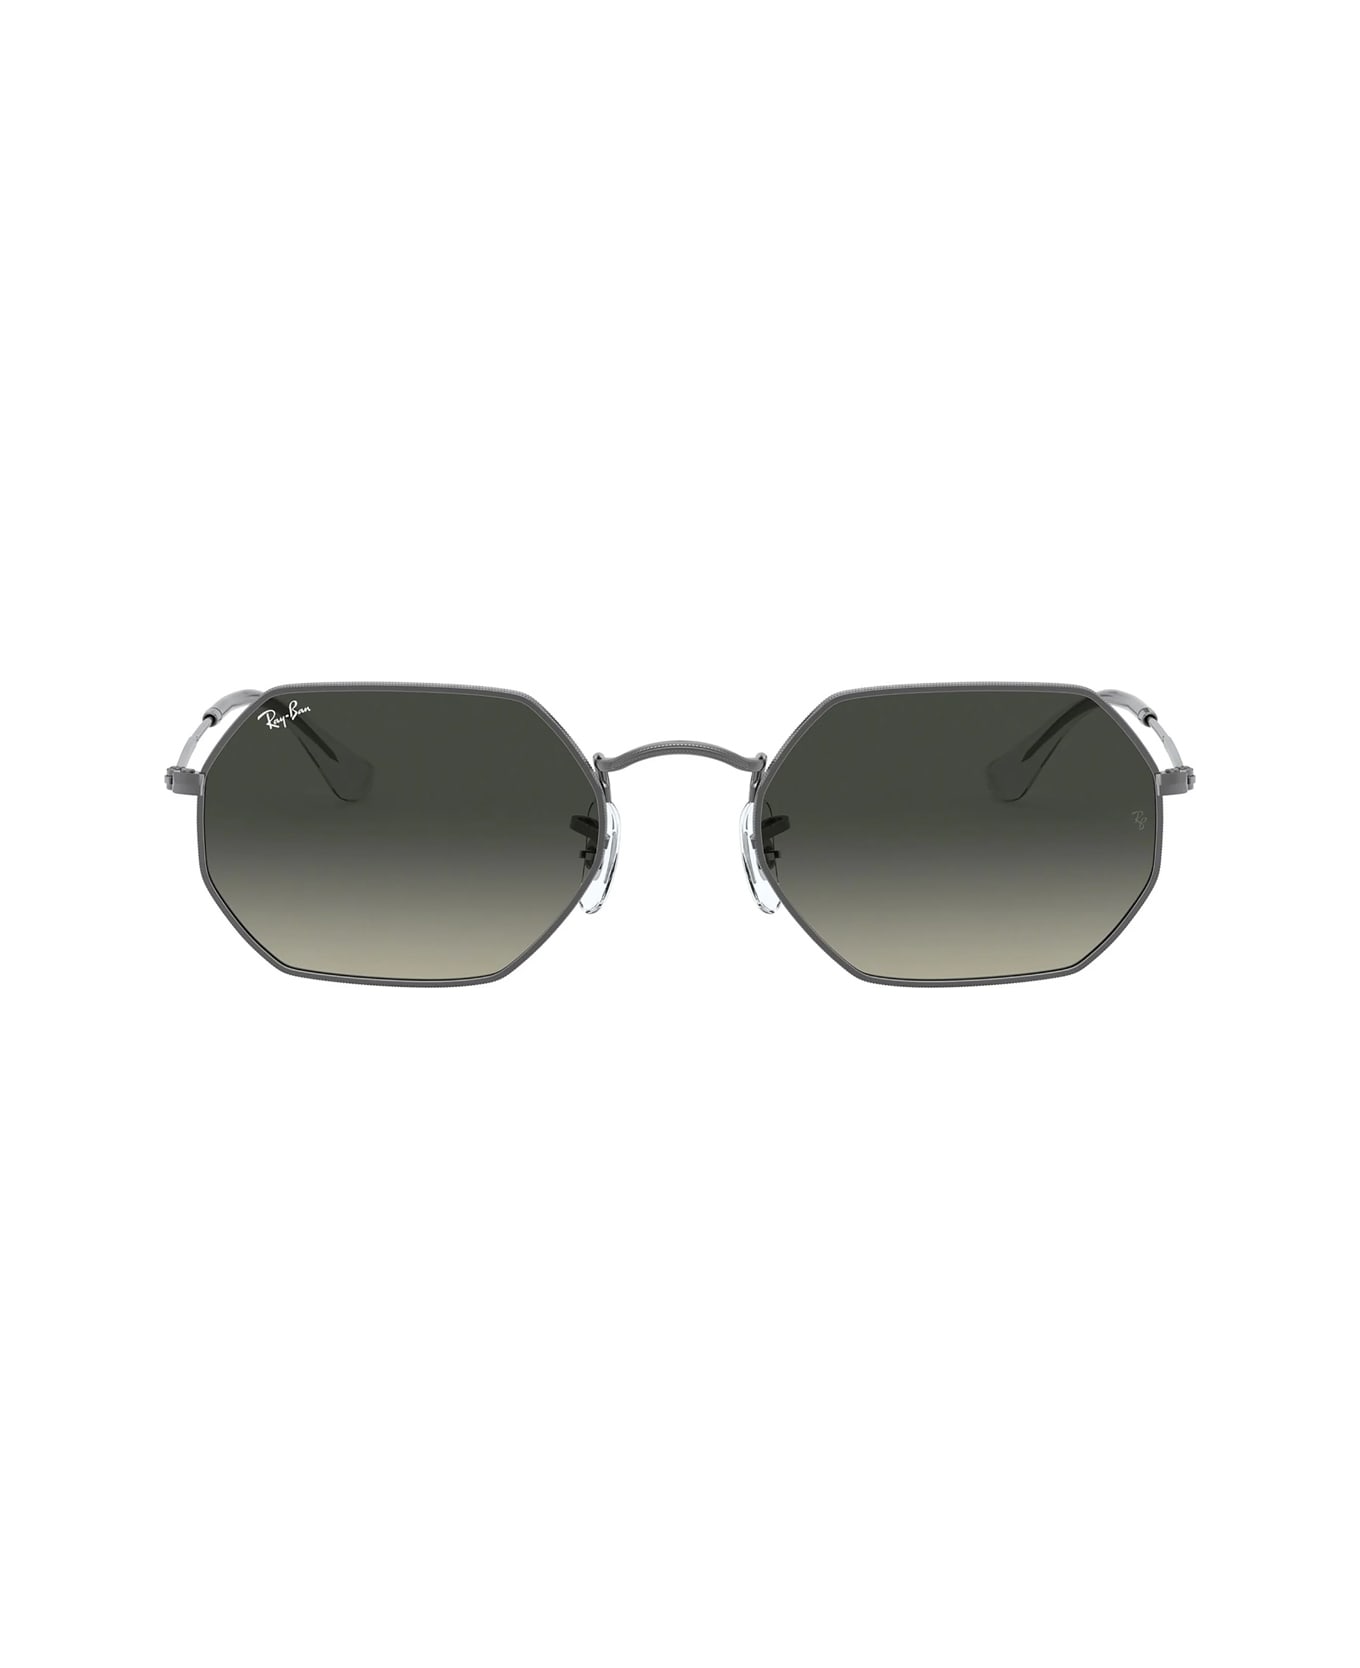 Ray-Ban Rb3556n Octagonal Sunglasses - Nero